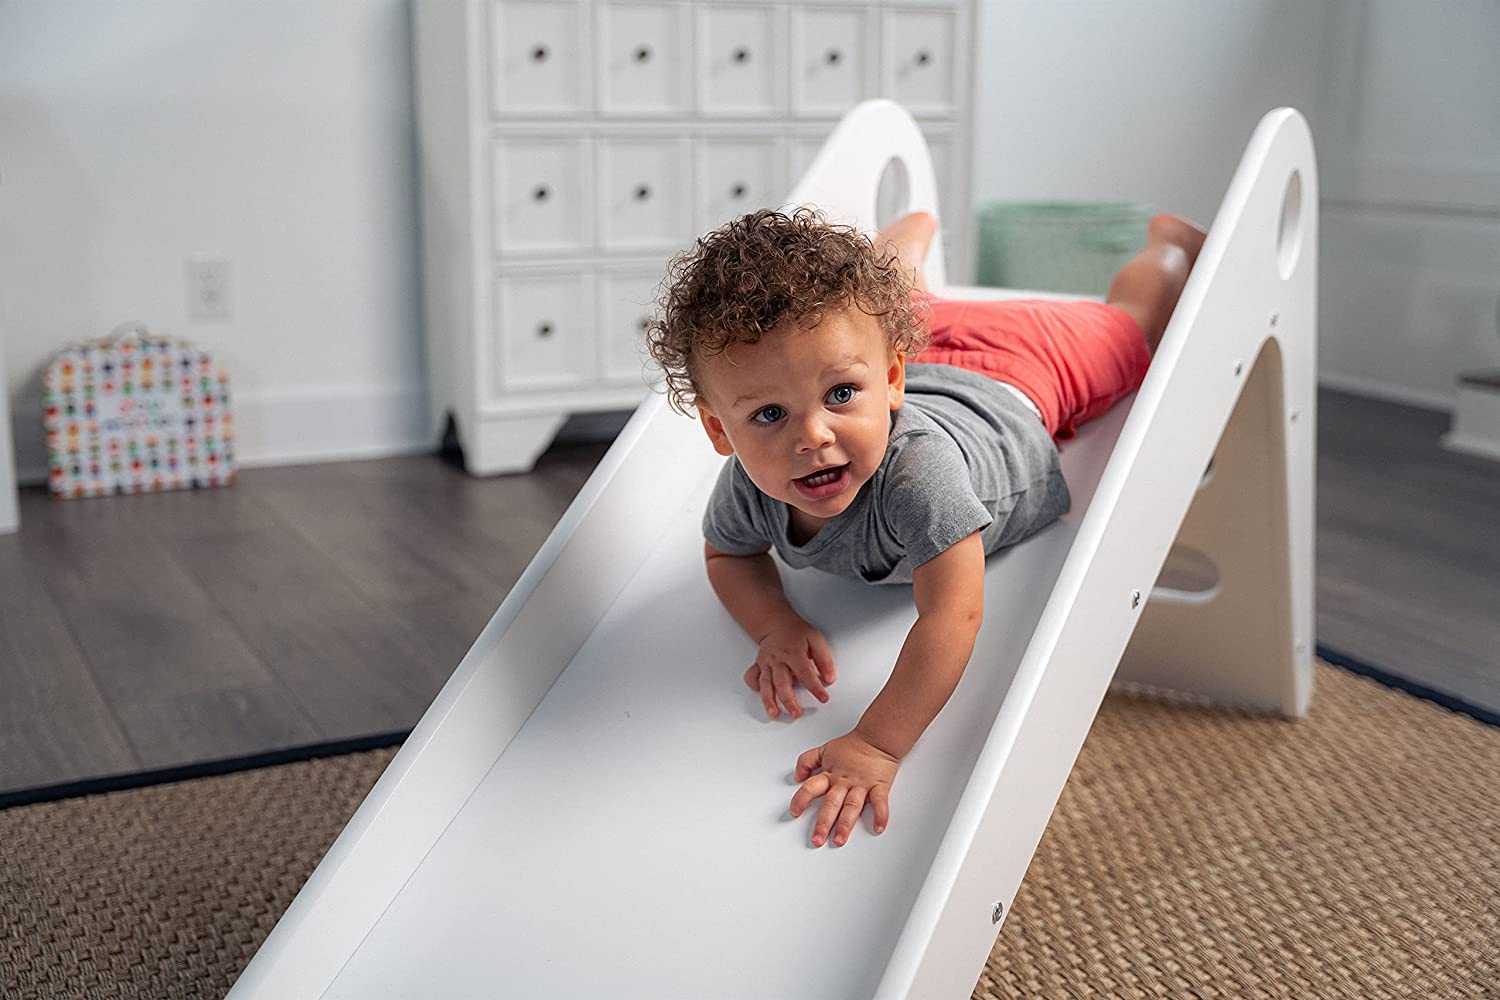 Toddler Sliding Down Manuka - Avenlur's Safe and Fun Indoor Toddler Slide in Playroom. Shown in White.